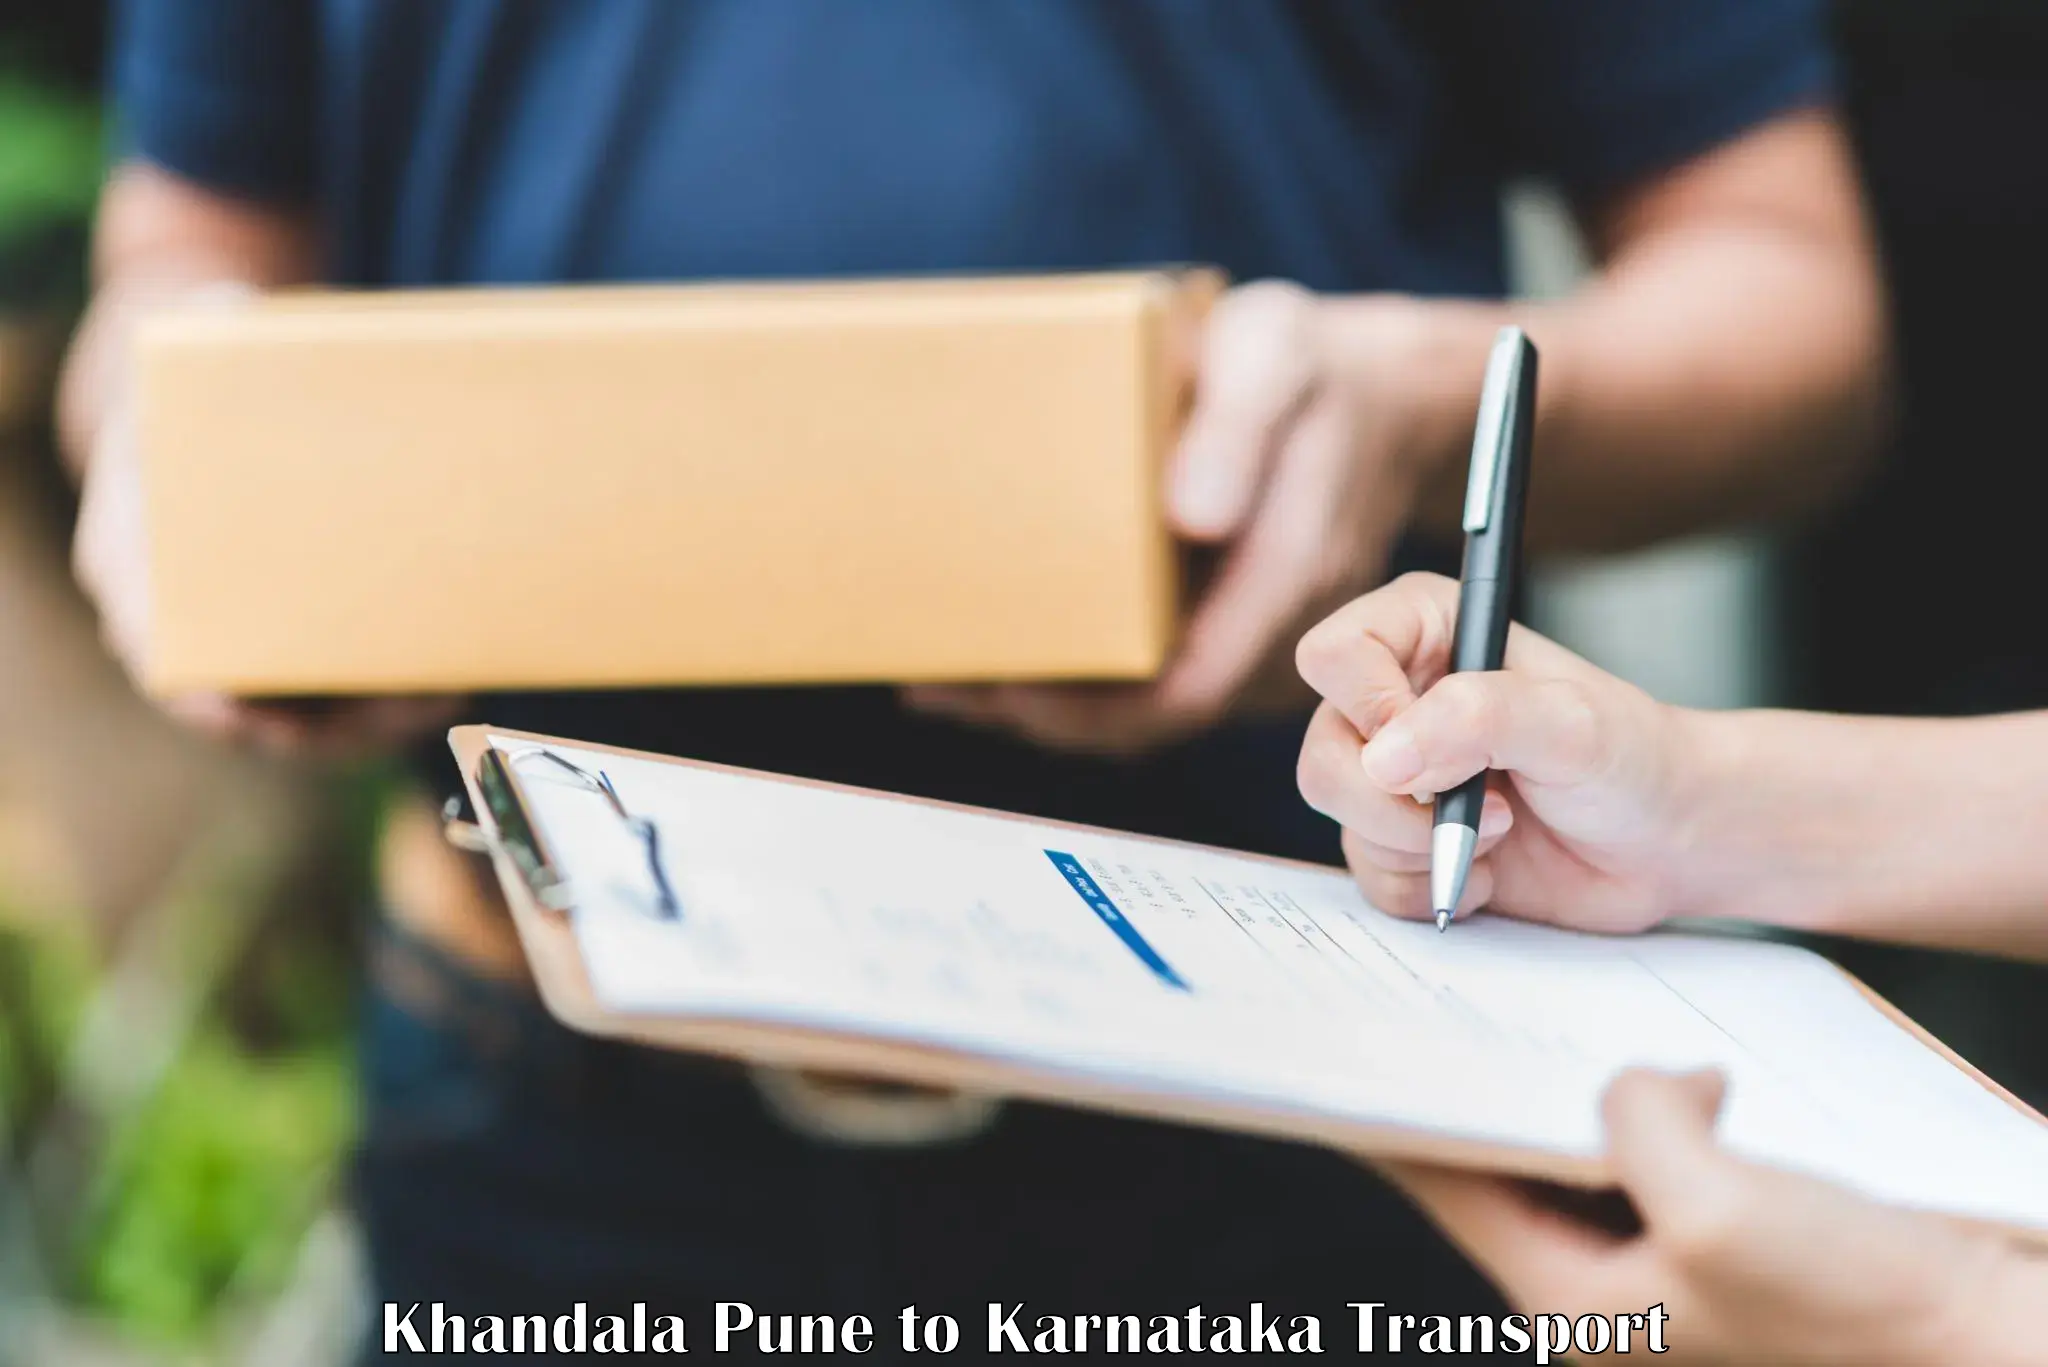 Container transport service Khandala Pune to Karnataka